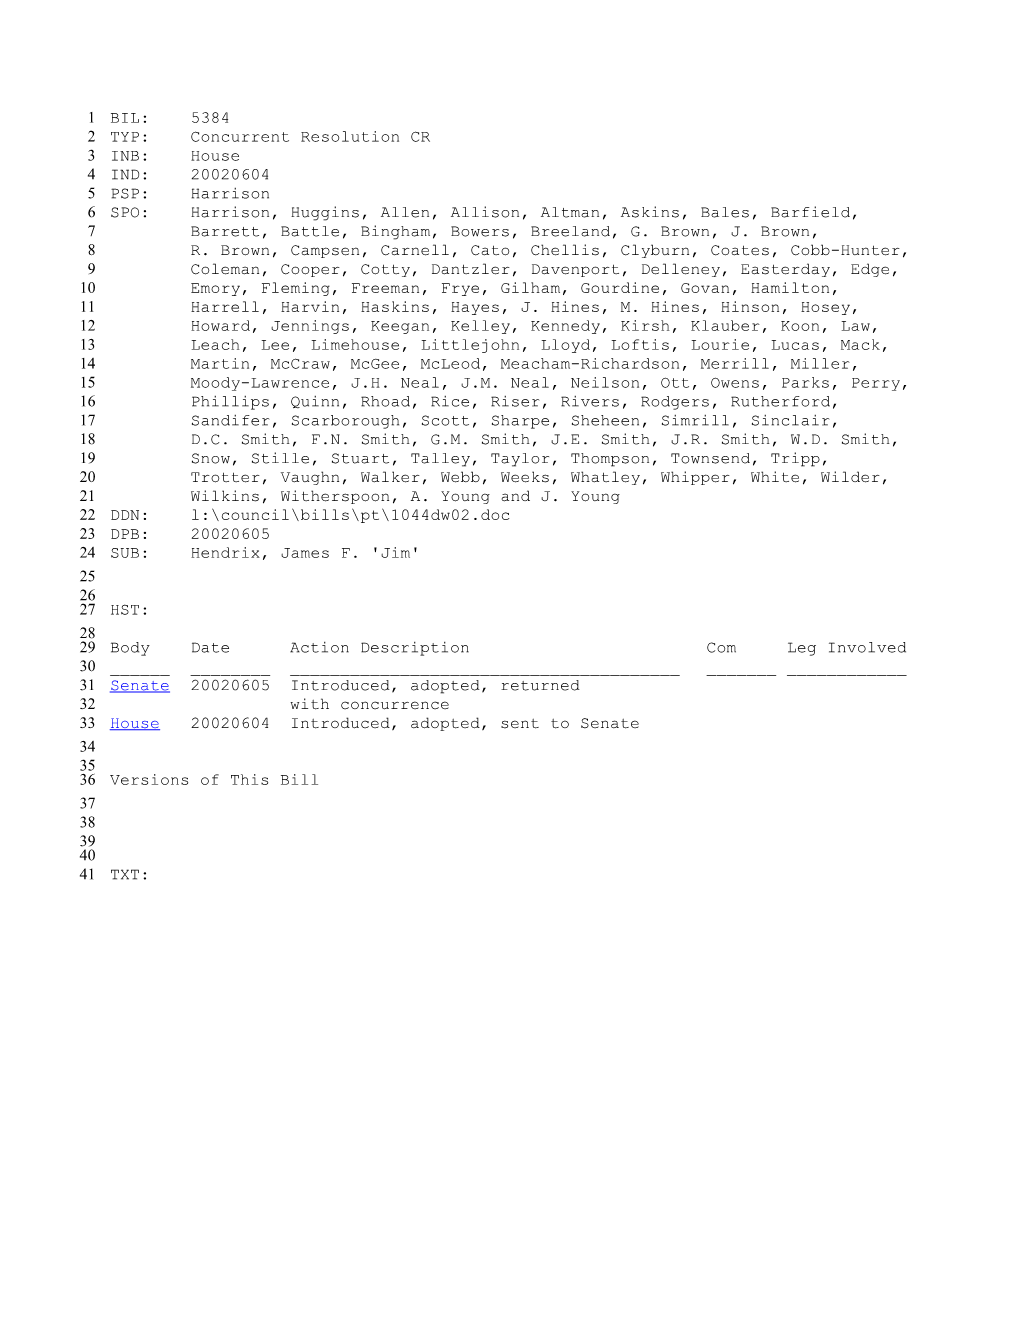 2001-2002 Bill 5384: Hendrix, James F. 'Jim' - South Carolina Legislature Online